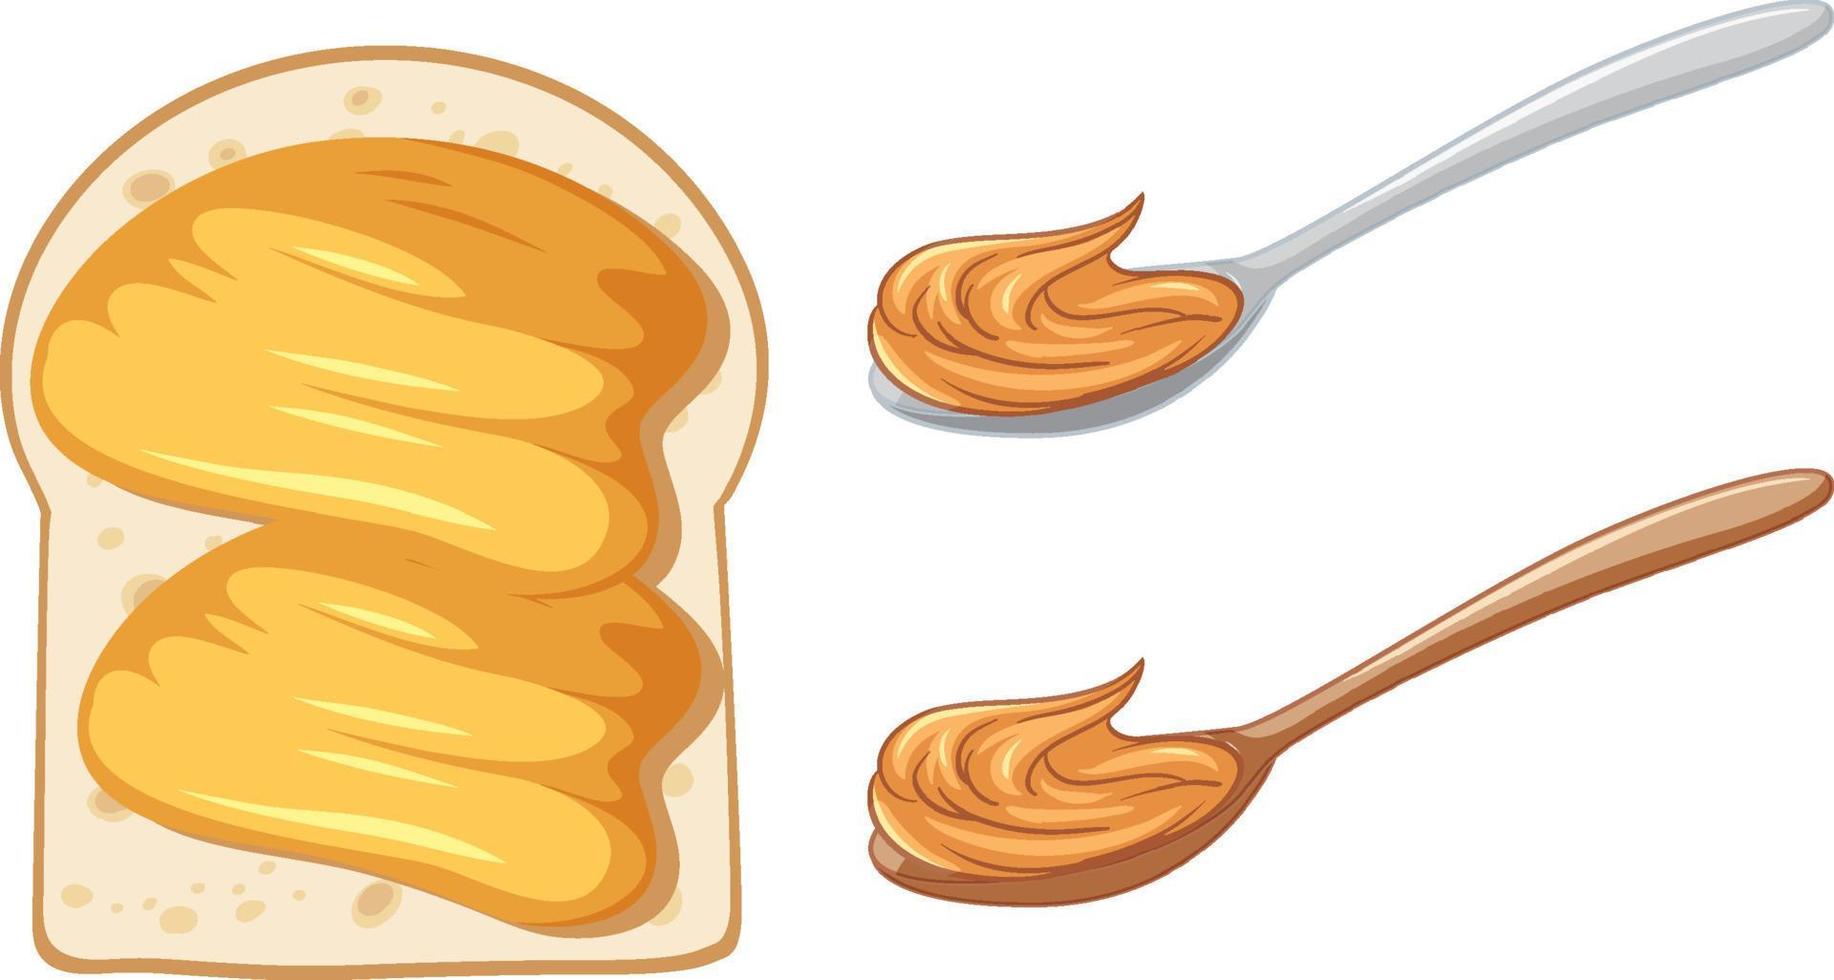 Brot mit Butter im Cartoon-Stil vektor